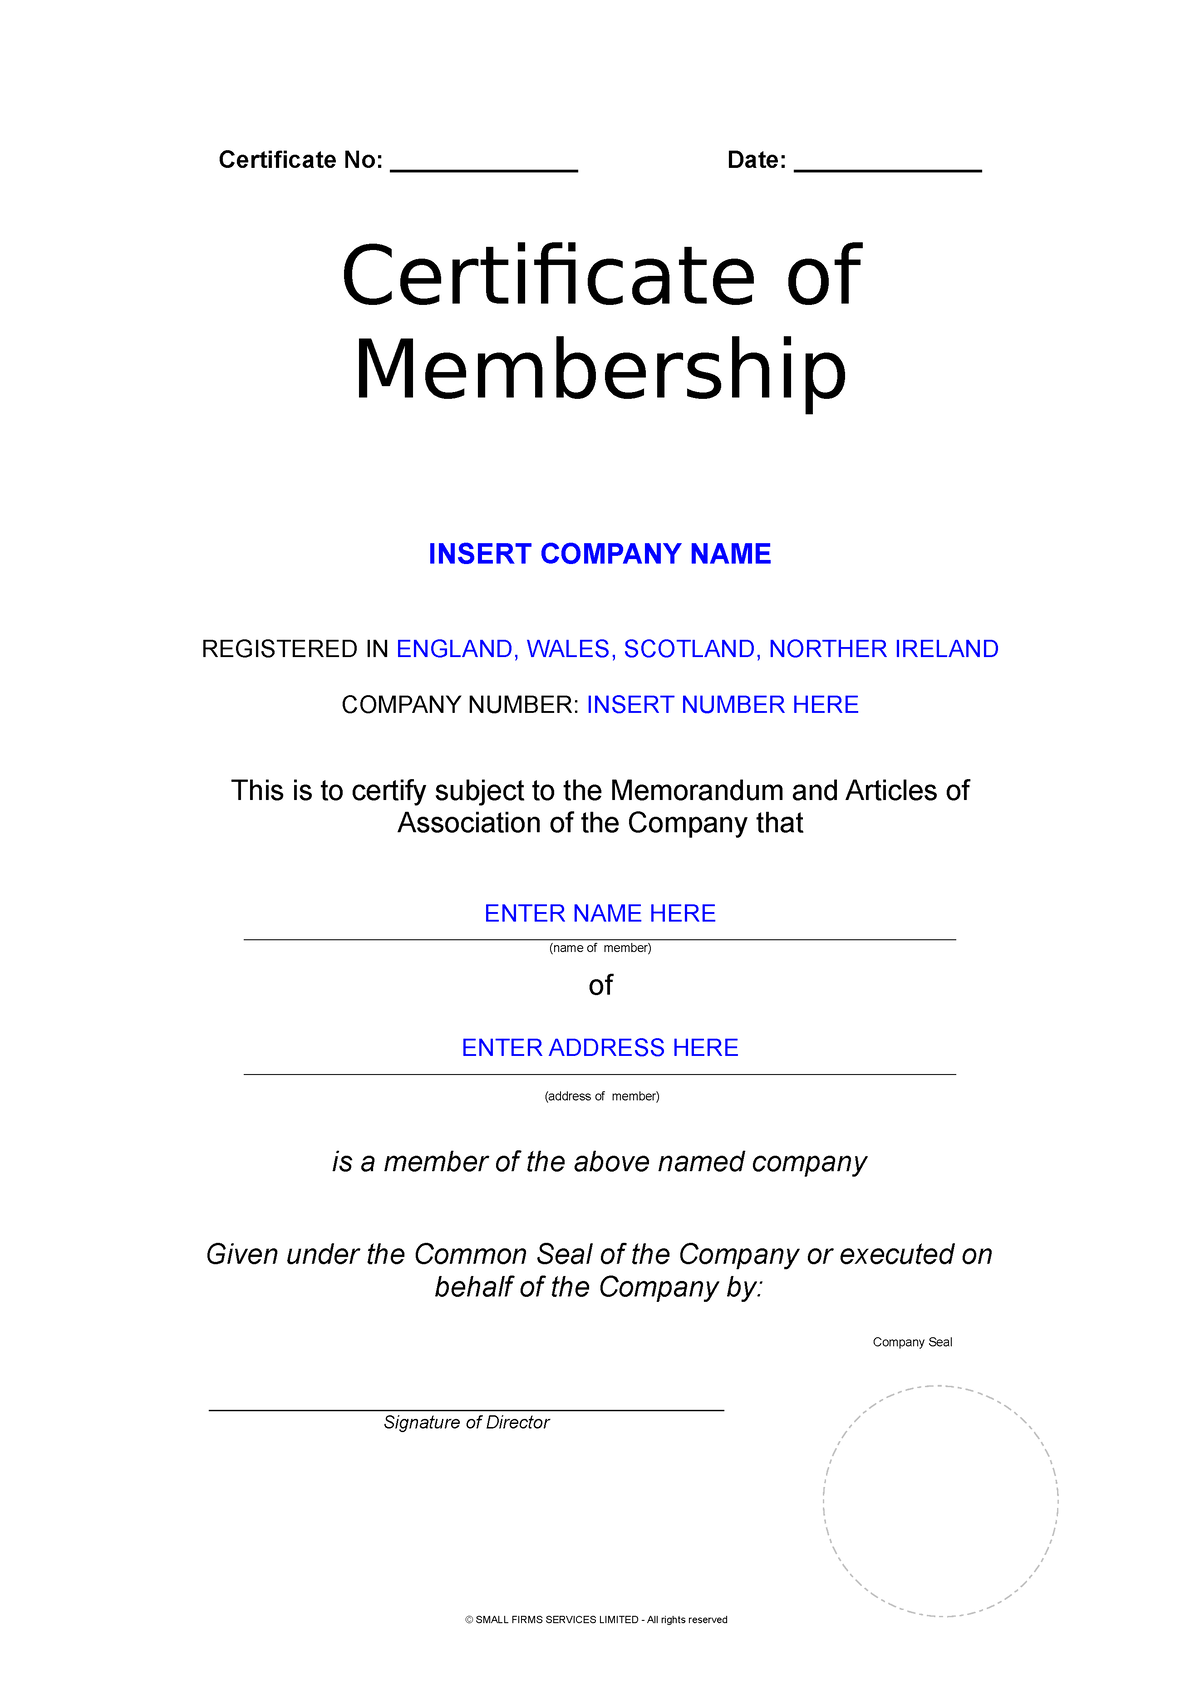 Certificate-of-membership - Certificate No: ______________ Date ...